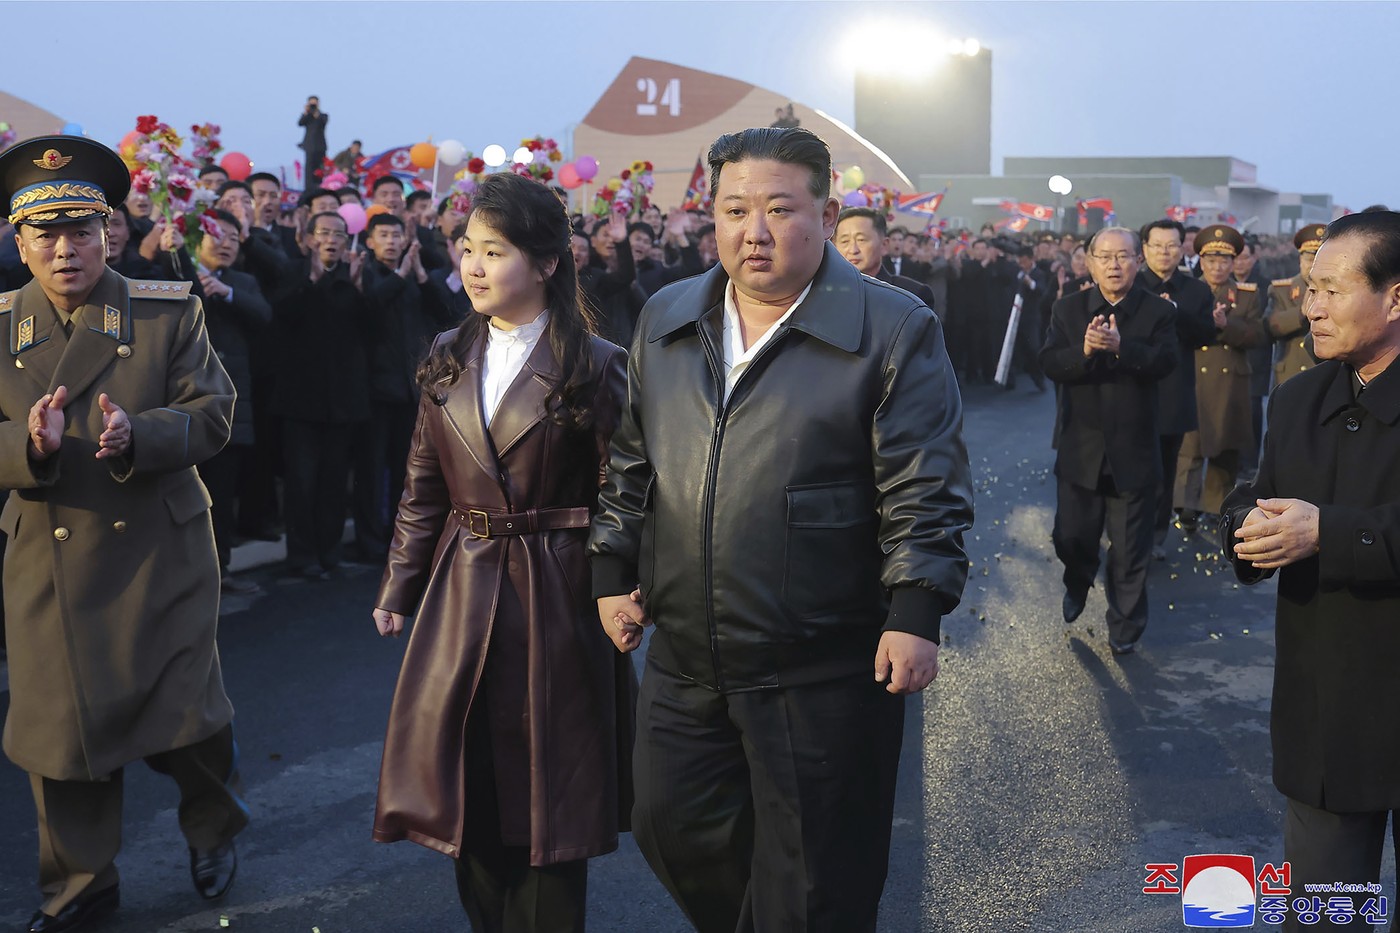 La ira de Kim Jong Un se desborda: el dictador norcoreano ha sufrido grandes inconvenientes